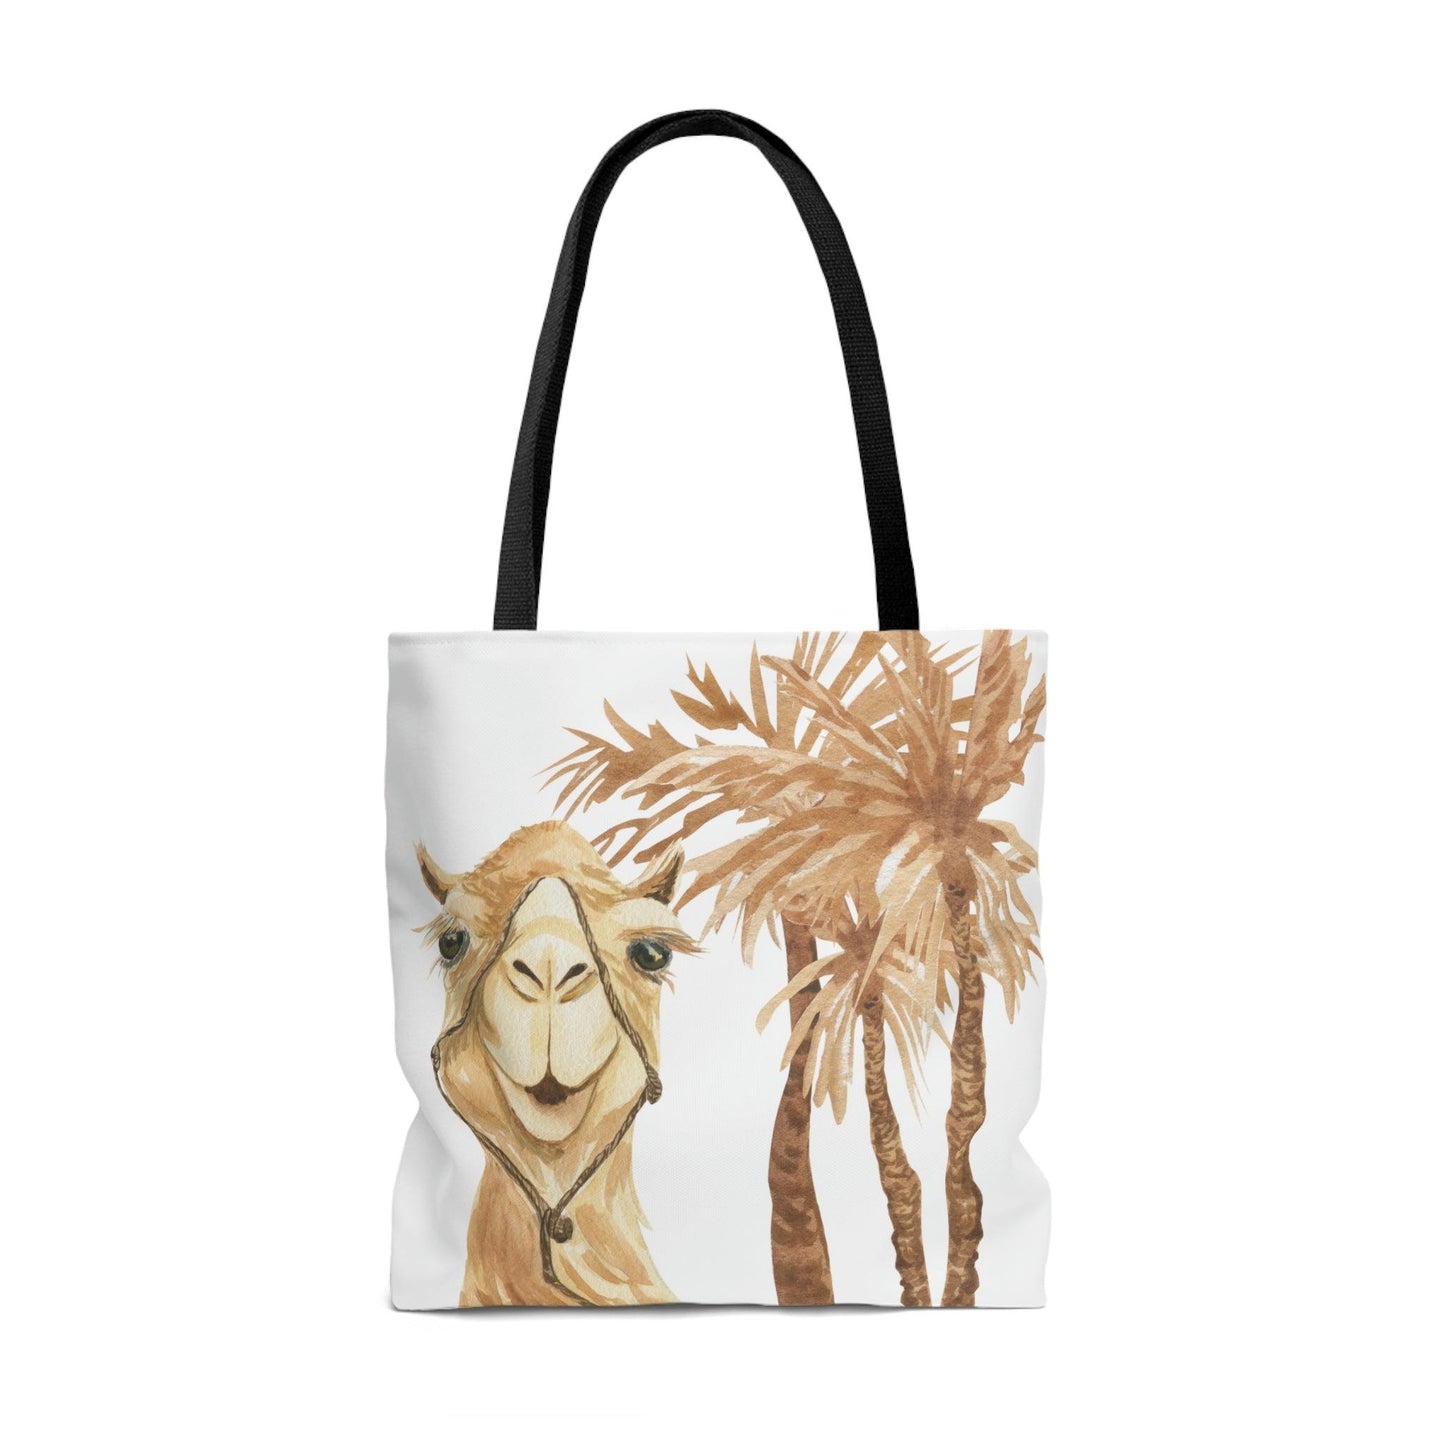 Moroccan Desert Camel Tote Bag - The Global Wanderer